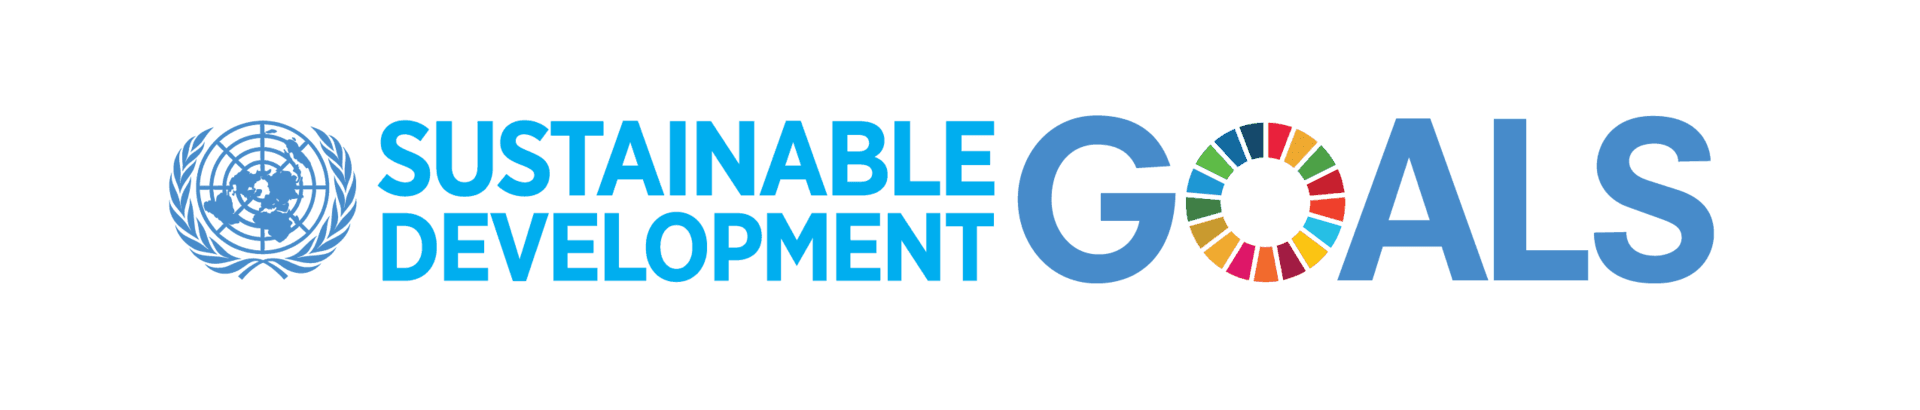 Sustainable Development Goals USA